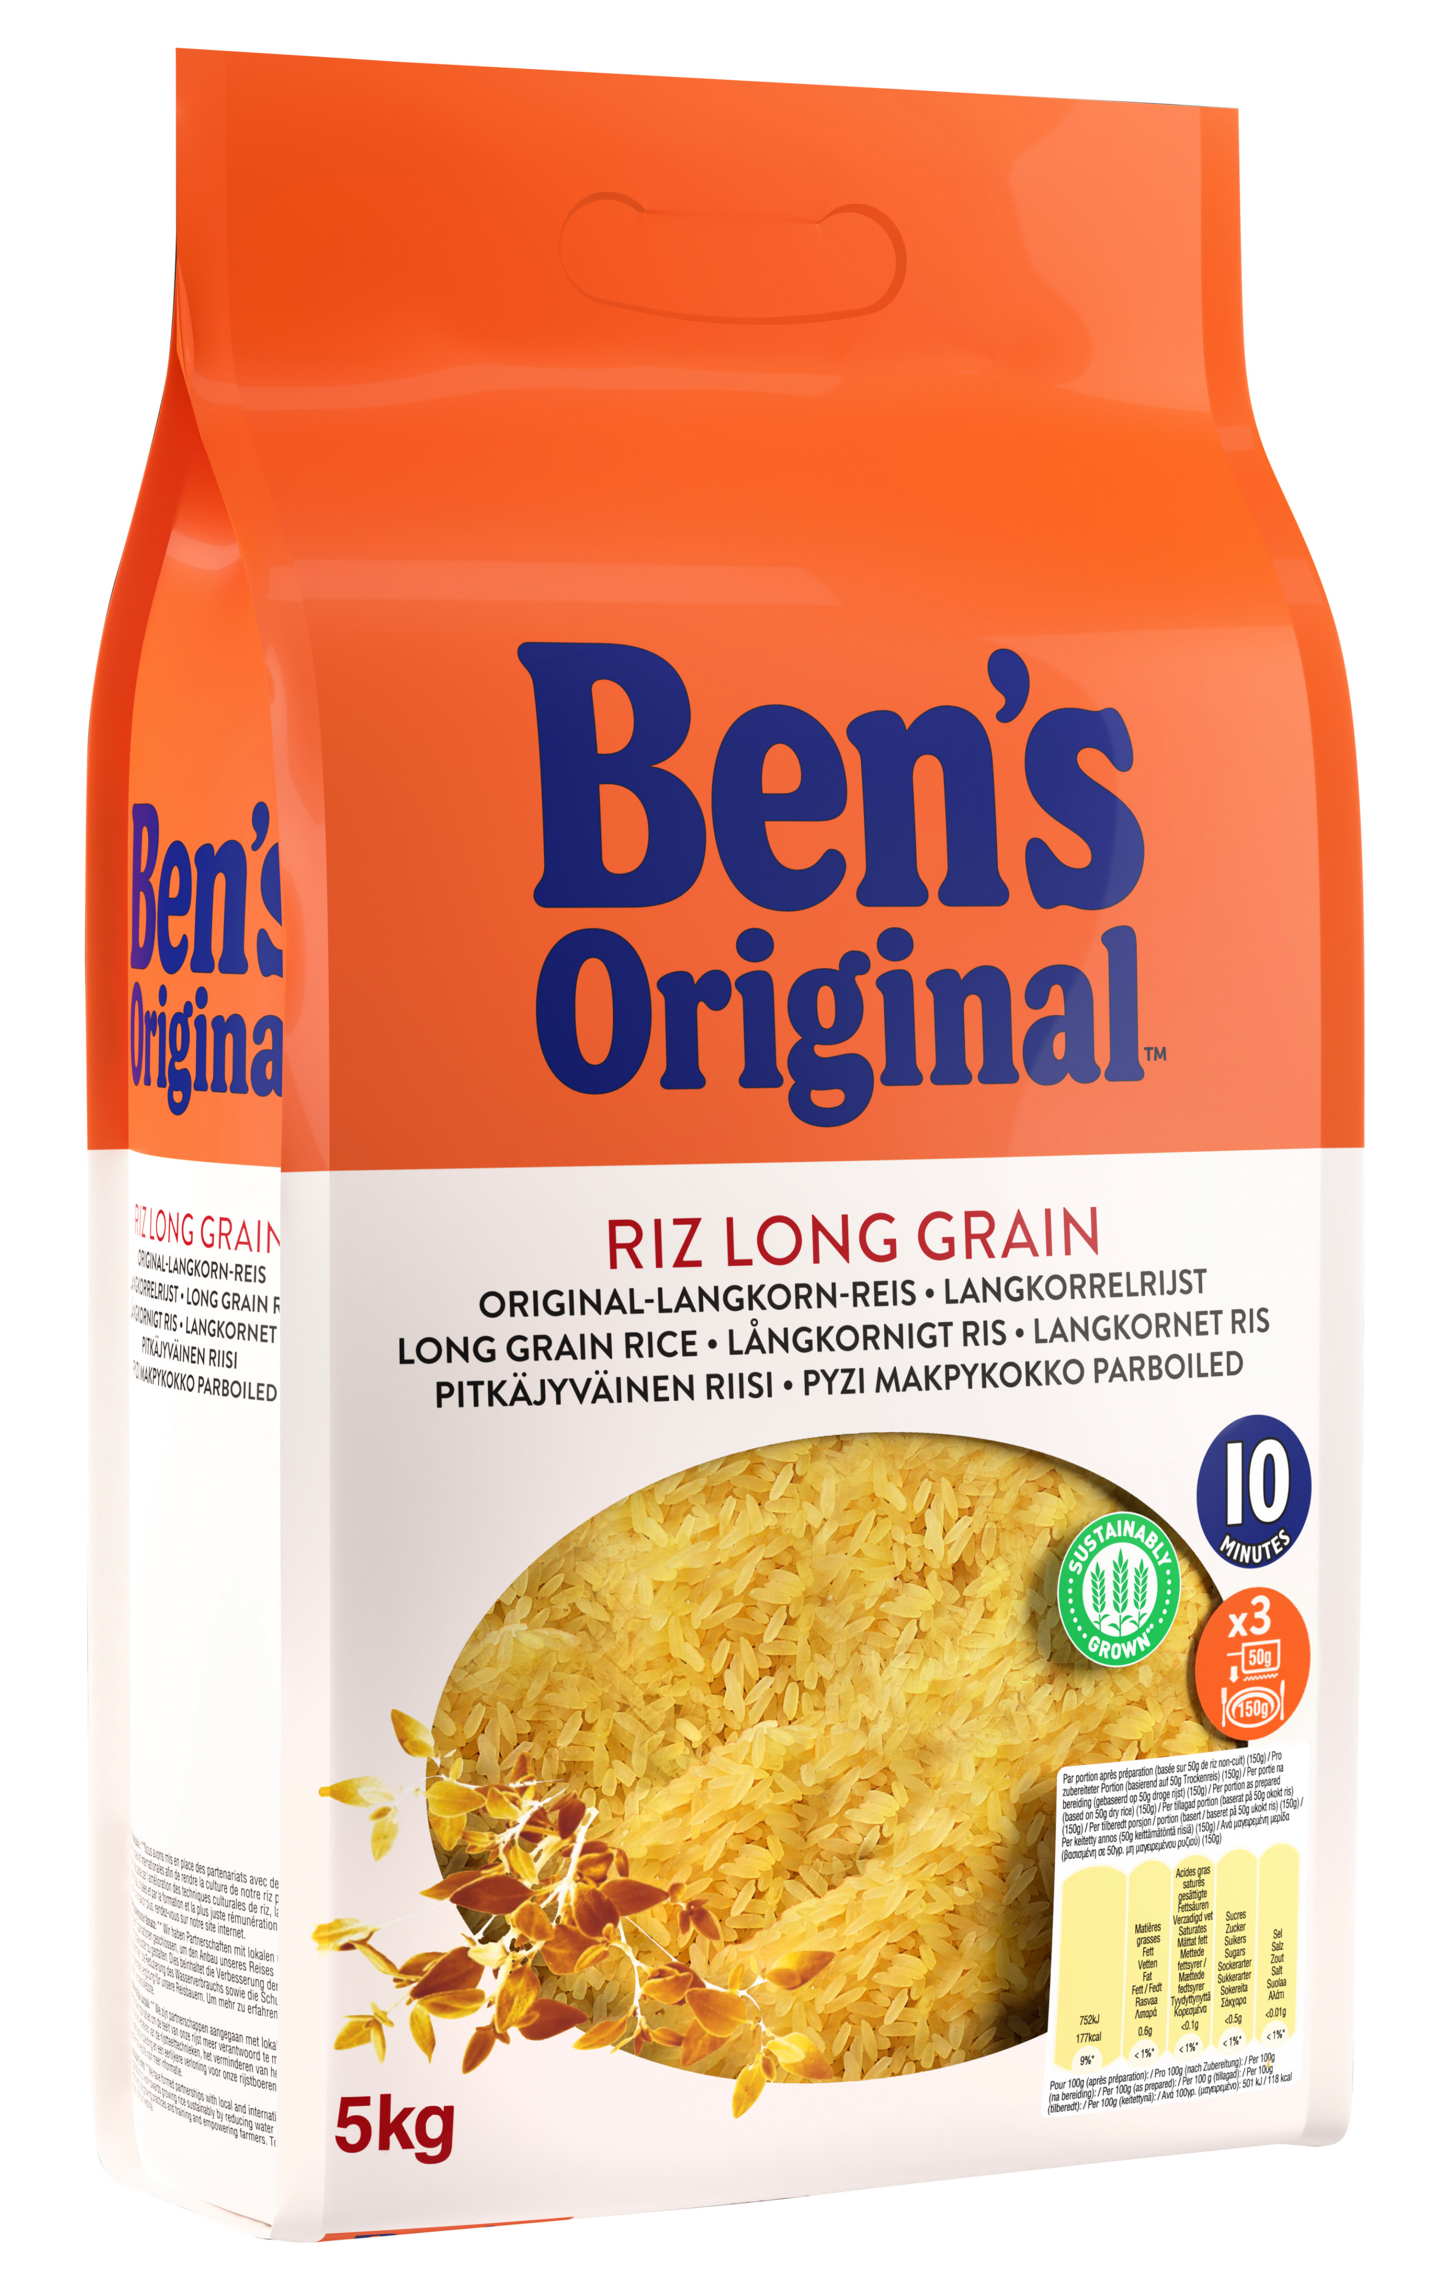 Ben's Original Pitkäjyväinen riisi 5kg